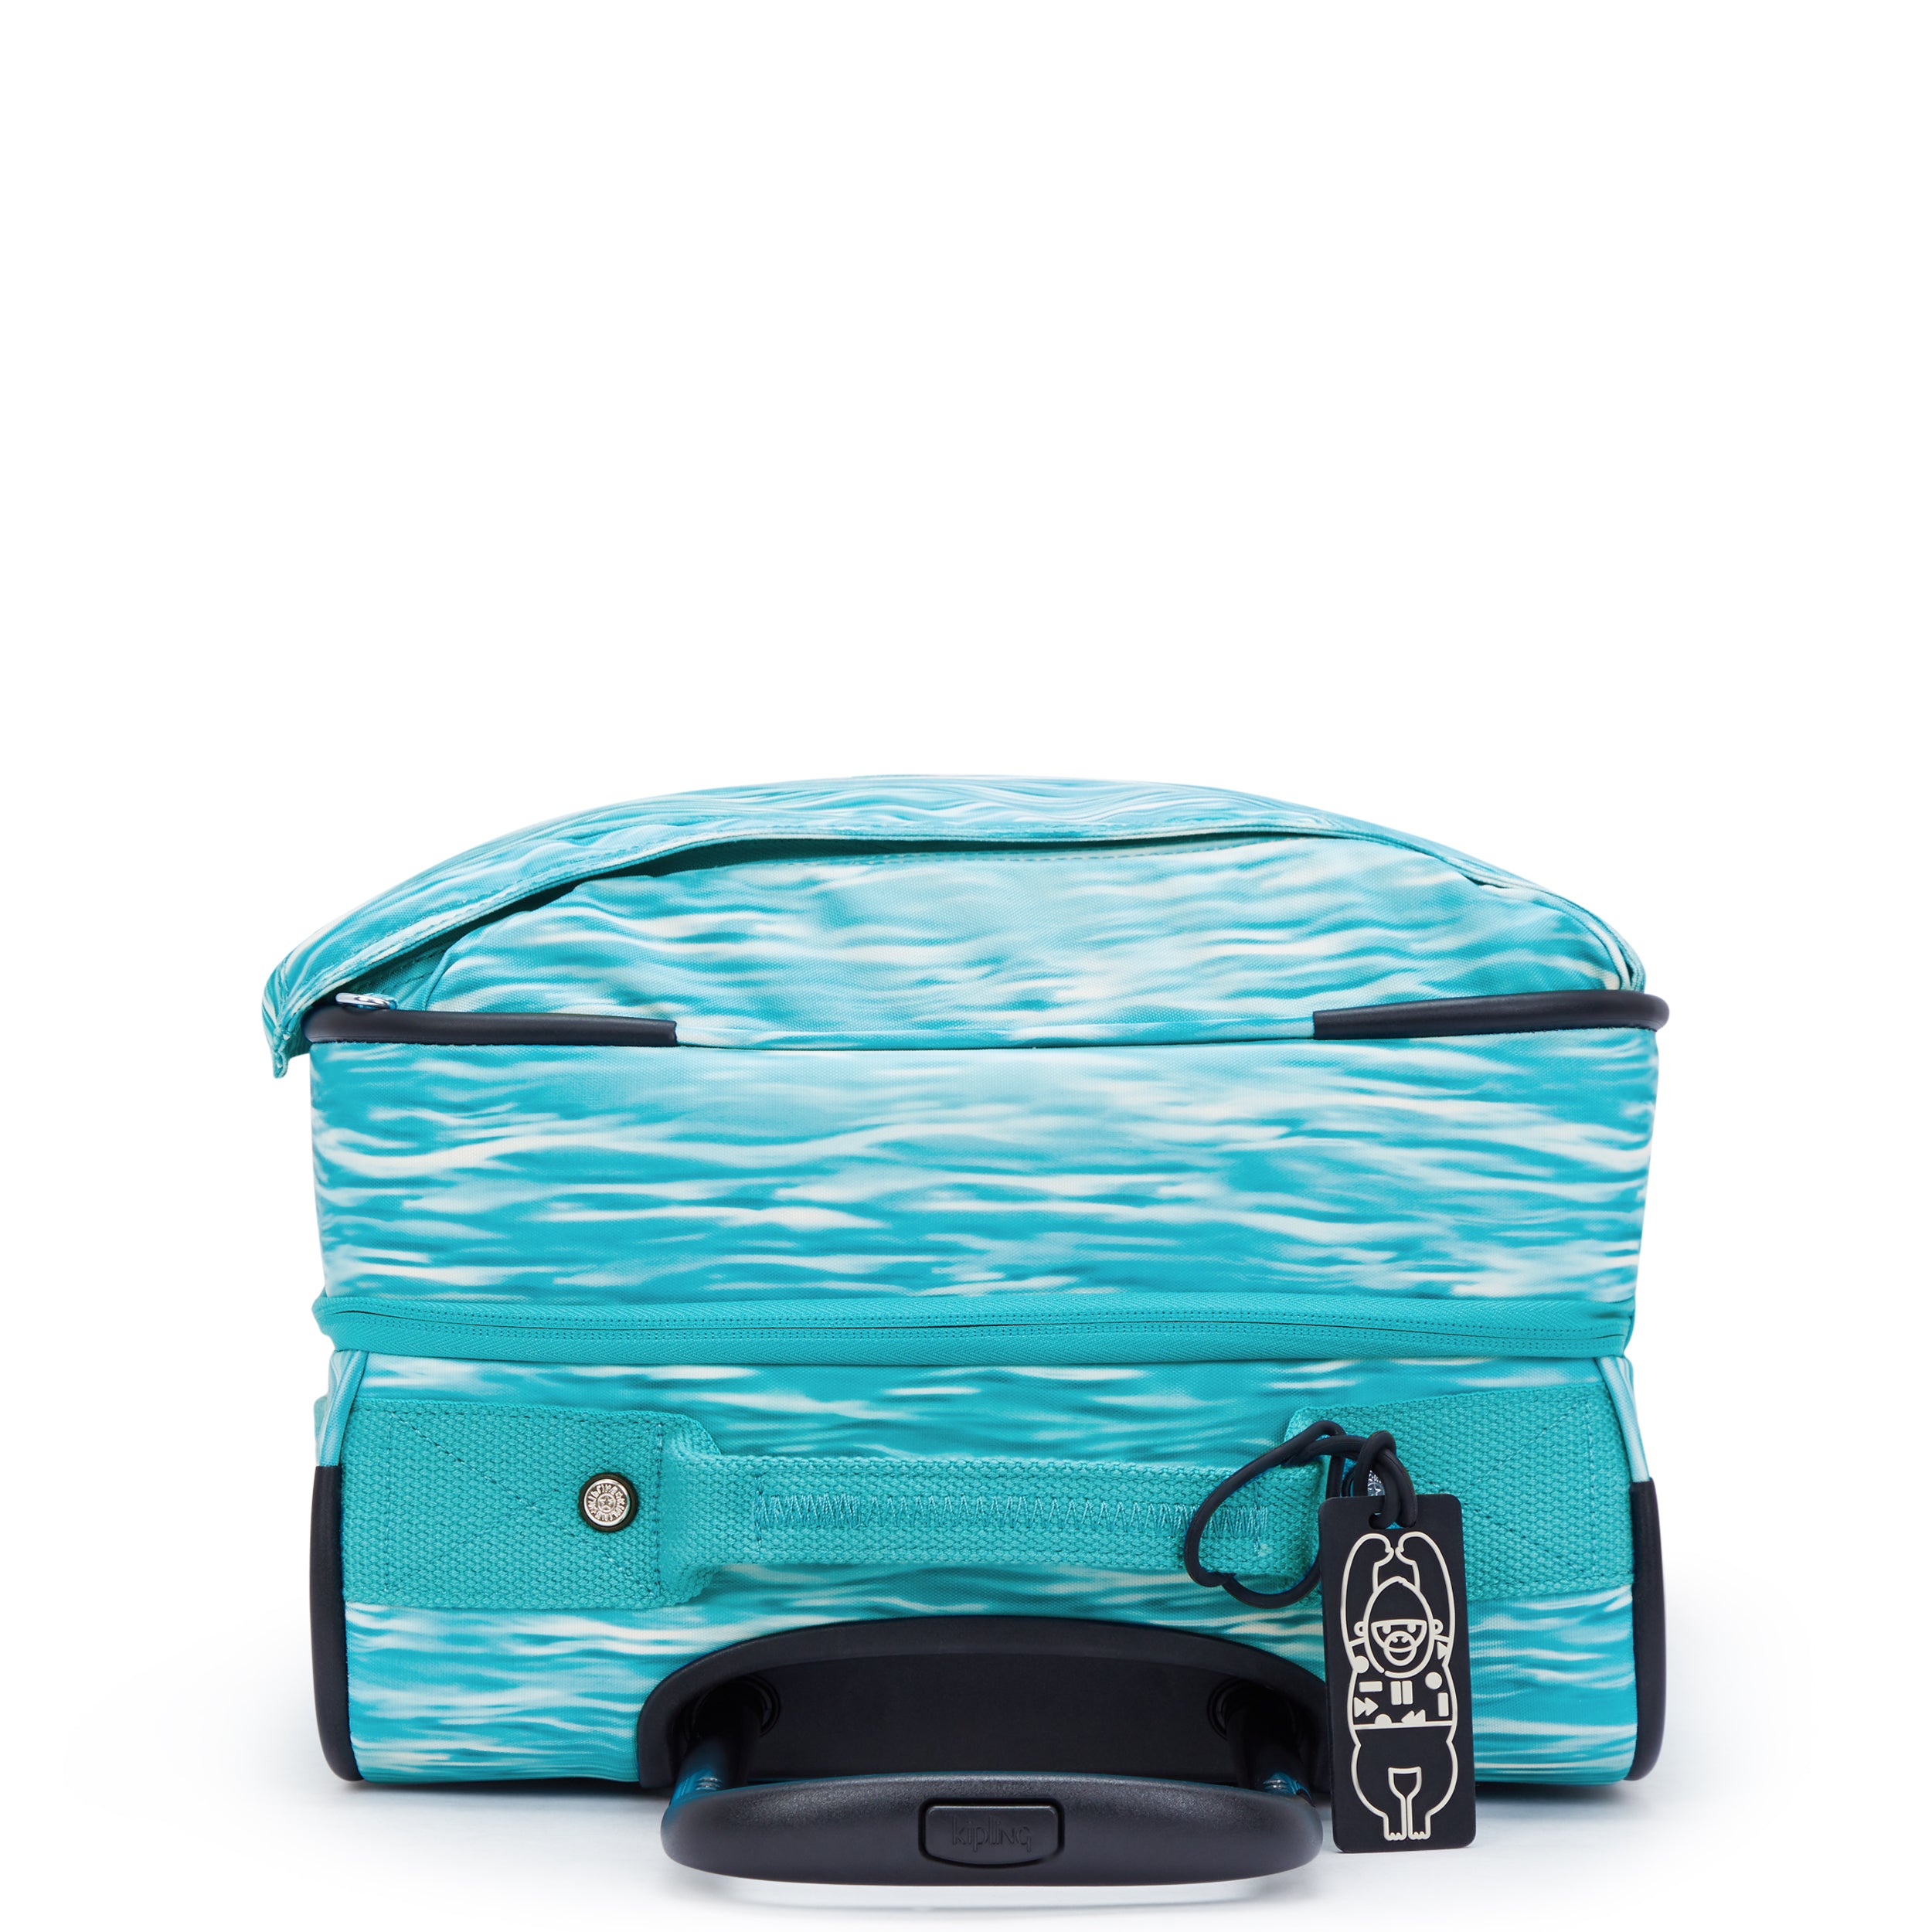 Kipling-Spontaneous S-Small Cabin Size Wheeled Luggage-Aqua Pool-I7211-5Mf